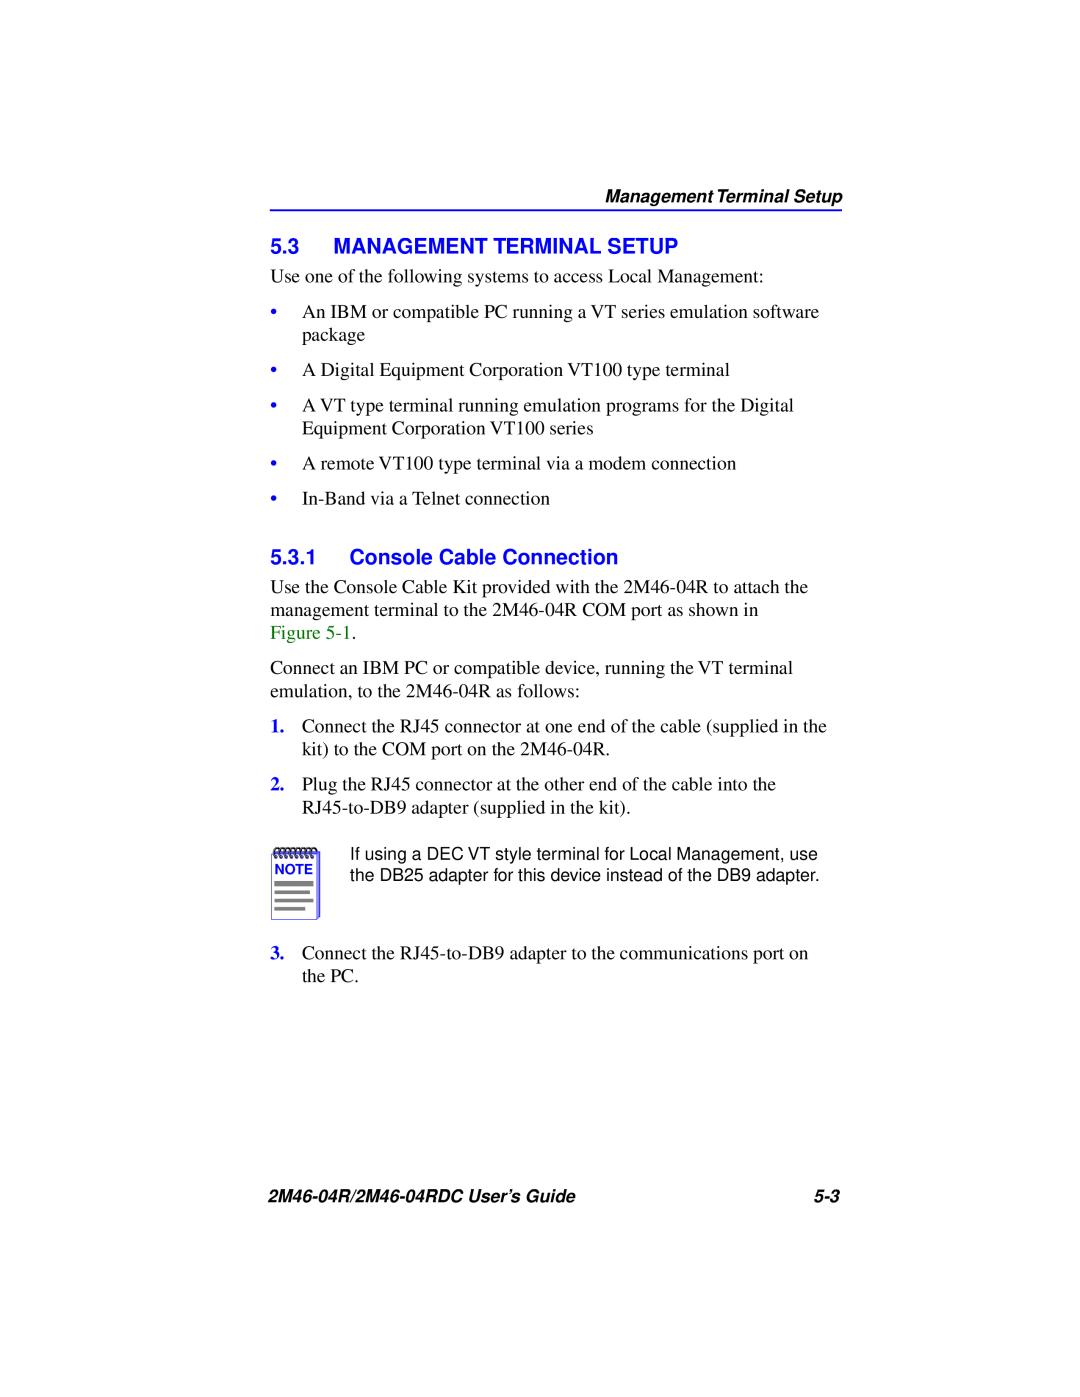 Cabletron Systems pmn manual Management Terminal Setup, Console Cable Connection 